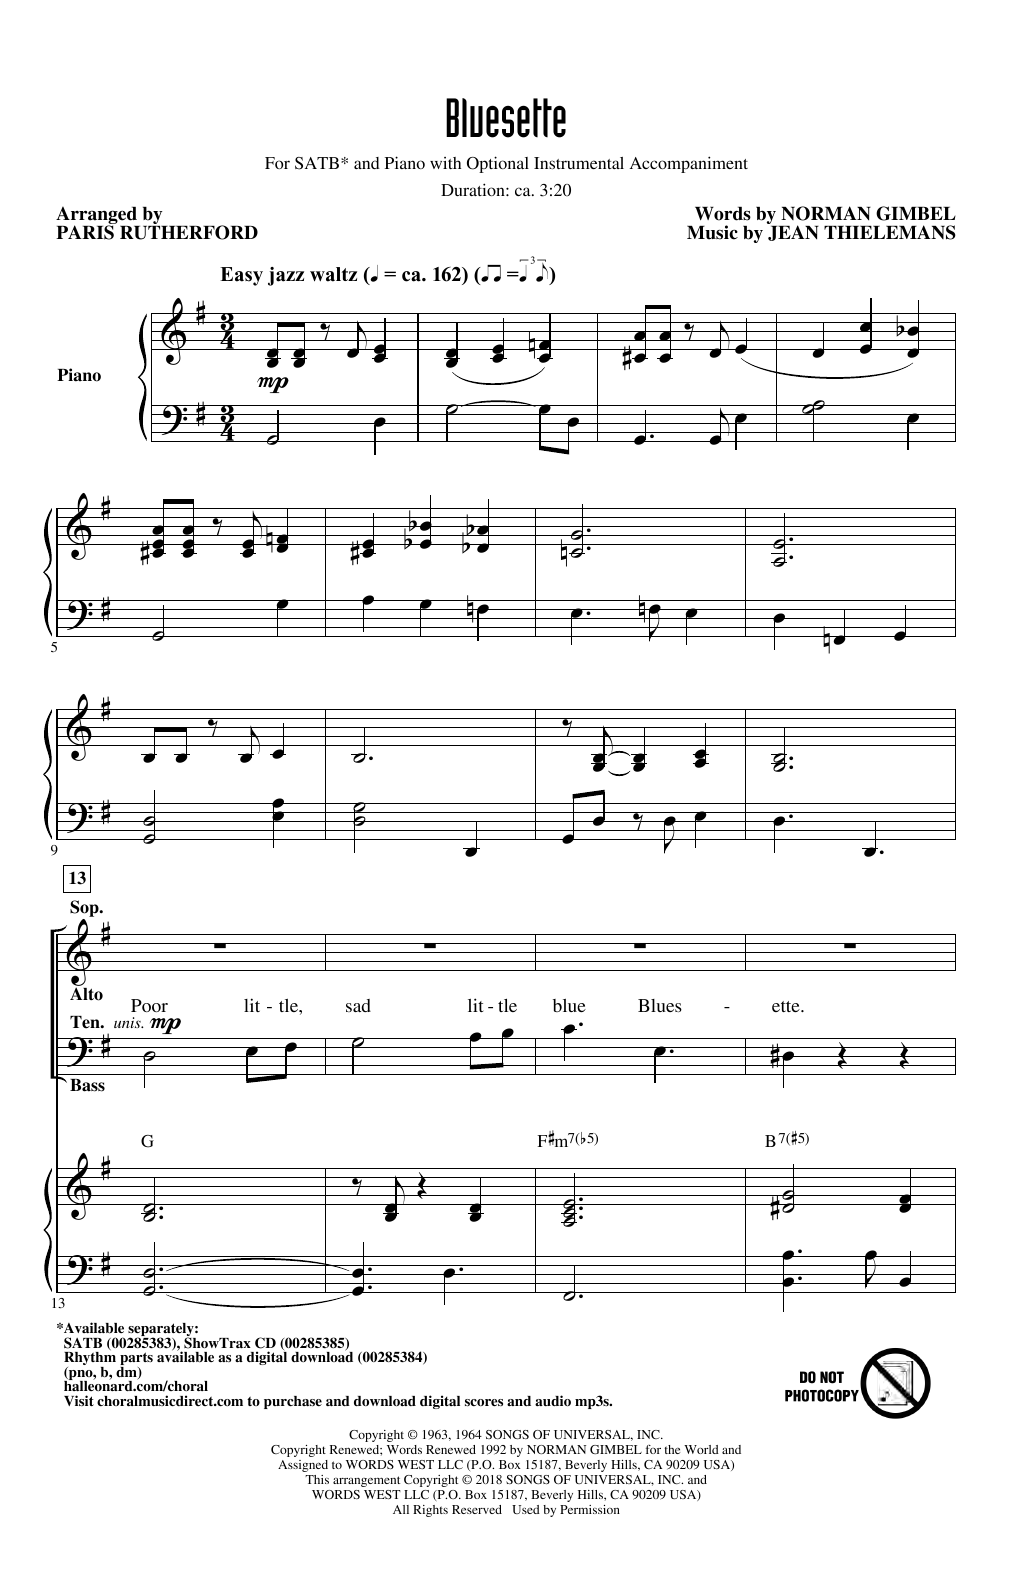 Toots Thielmans Bluesette (arr. Paris Rutherford) Sheet Music Notes & Chords for SATB - Download or Print PDF